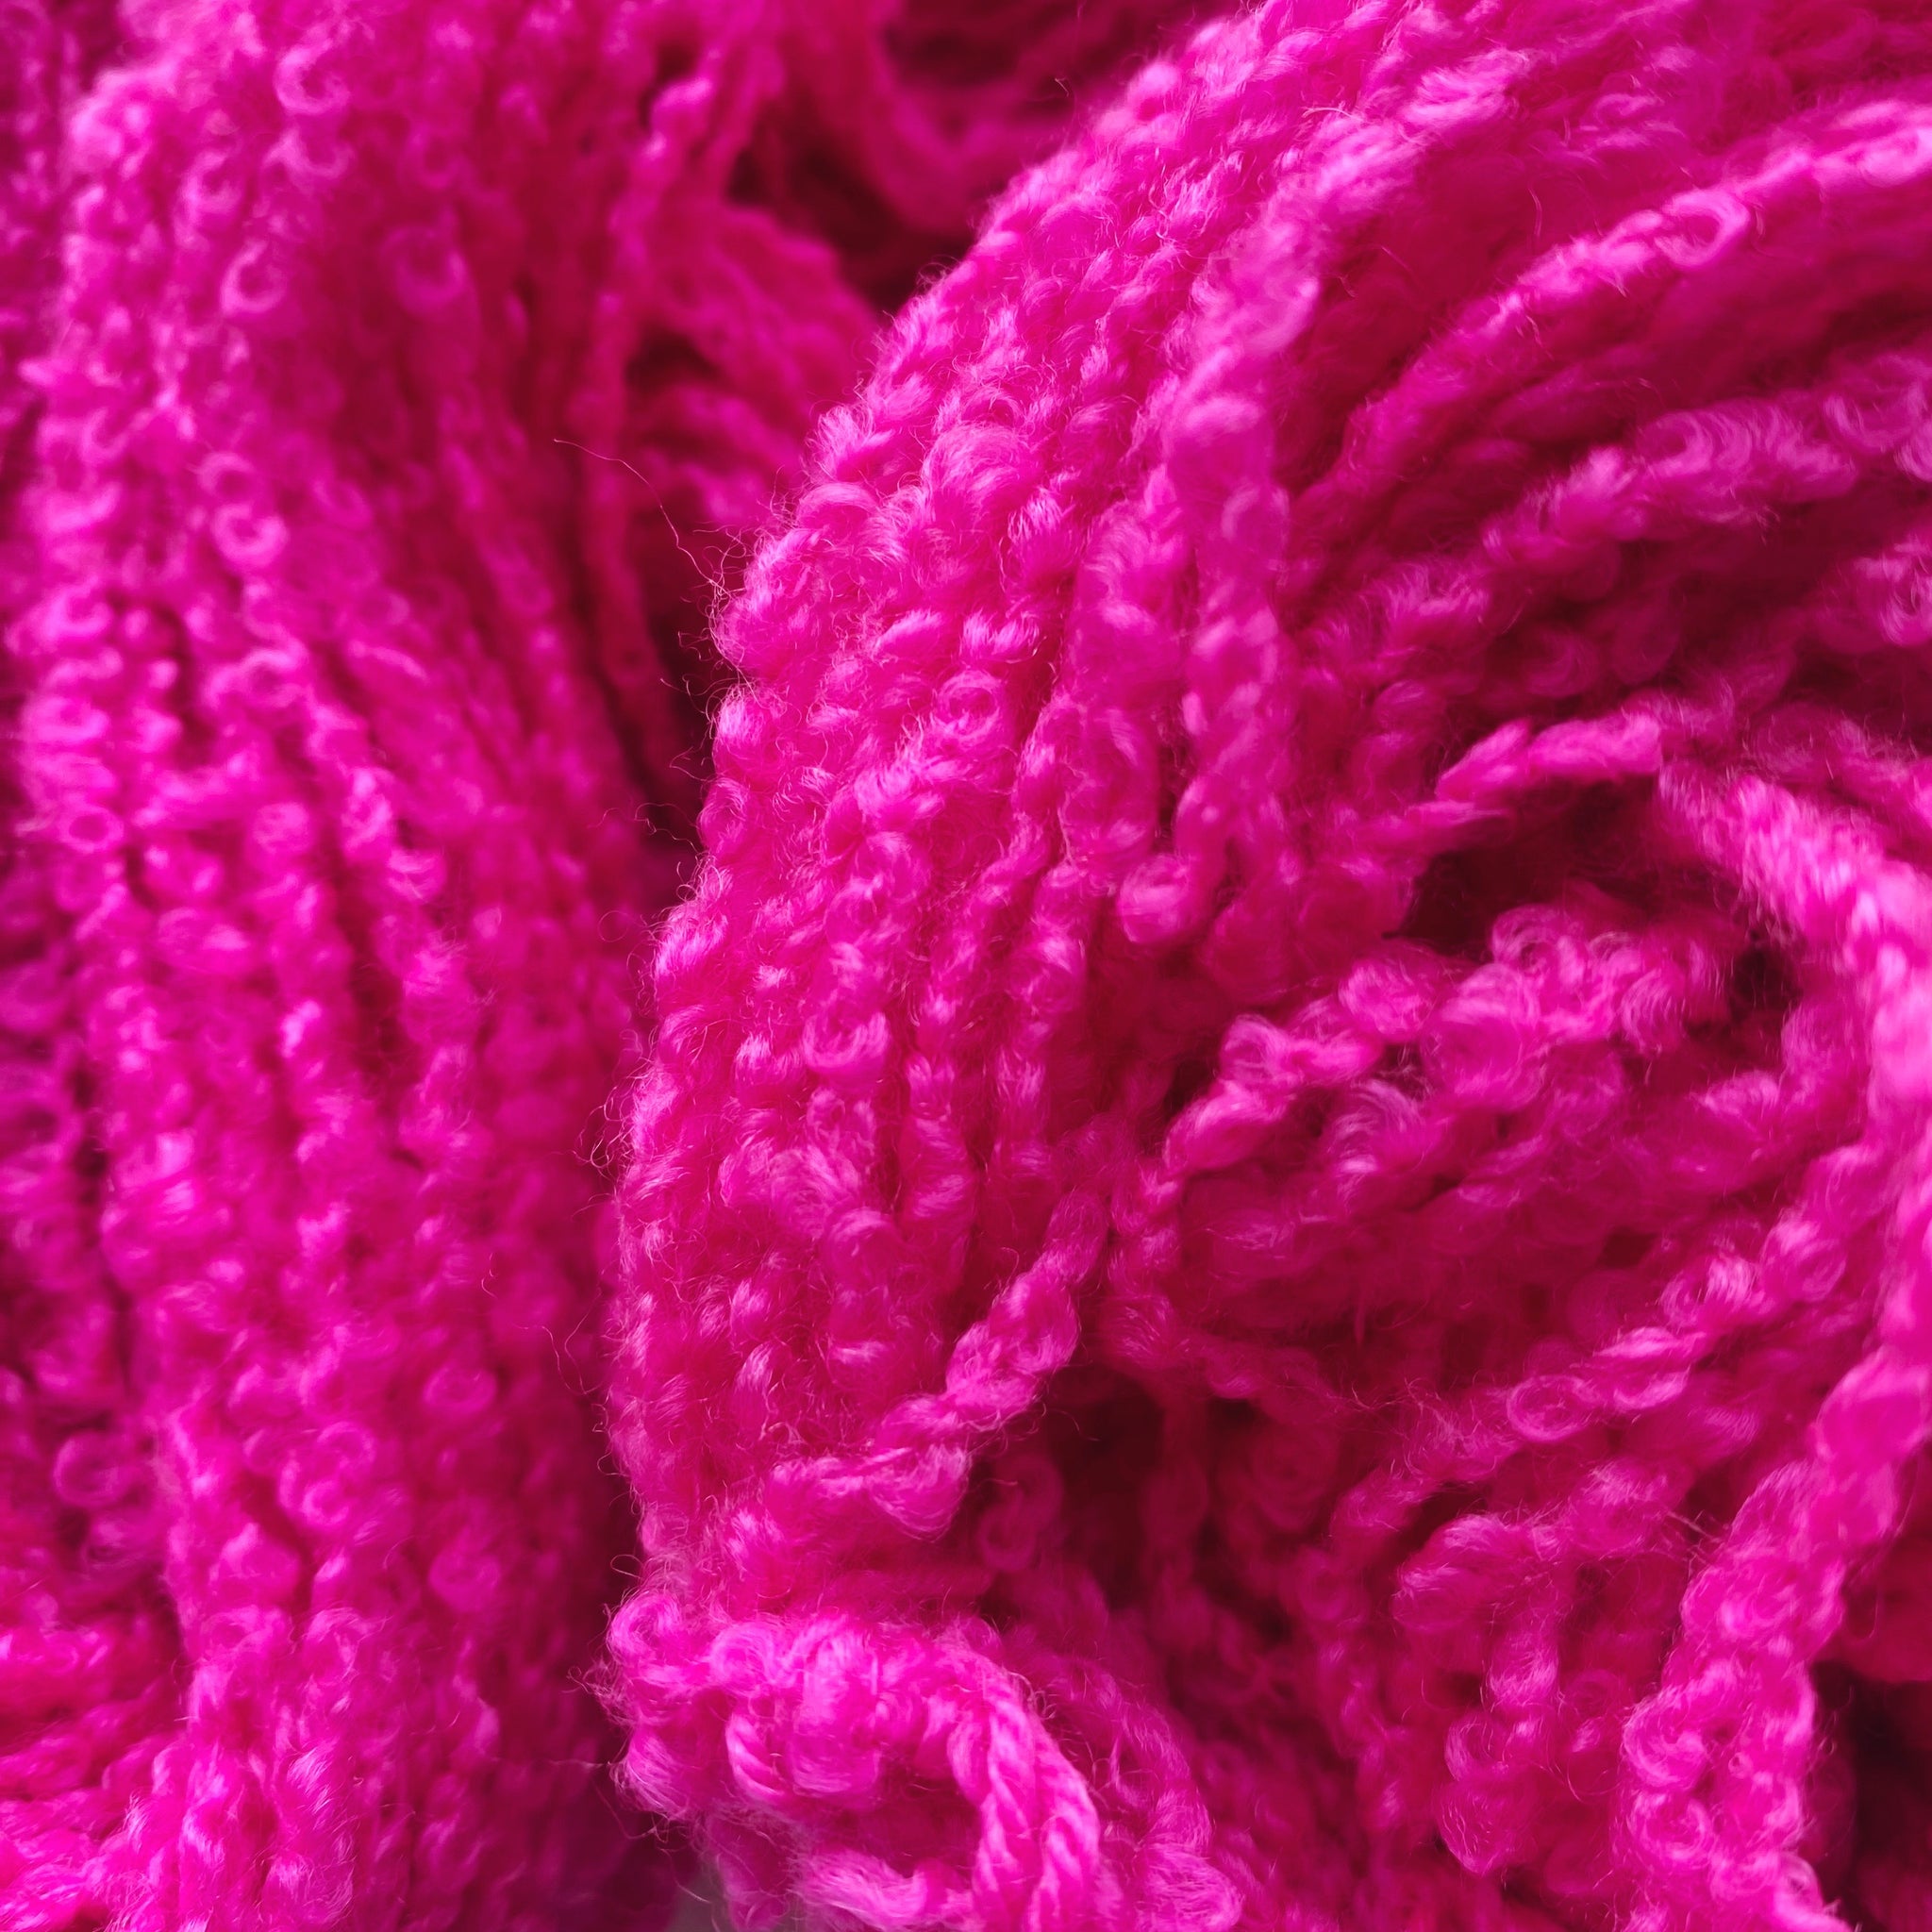 Boucle Yarn, Never Again : r/knitting